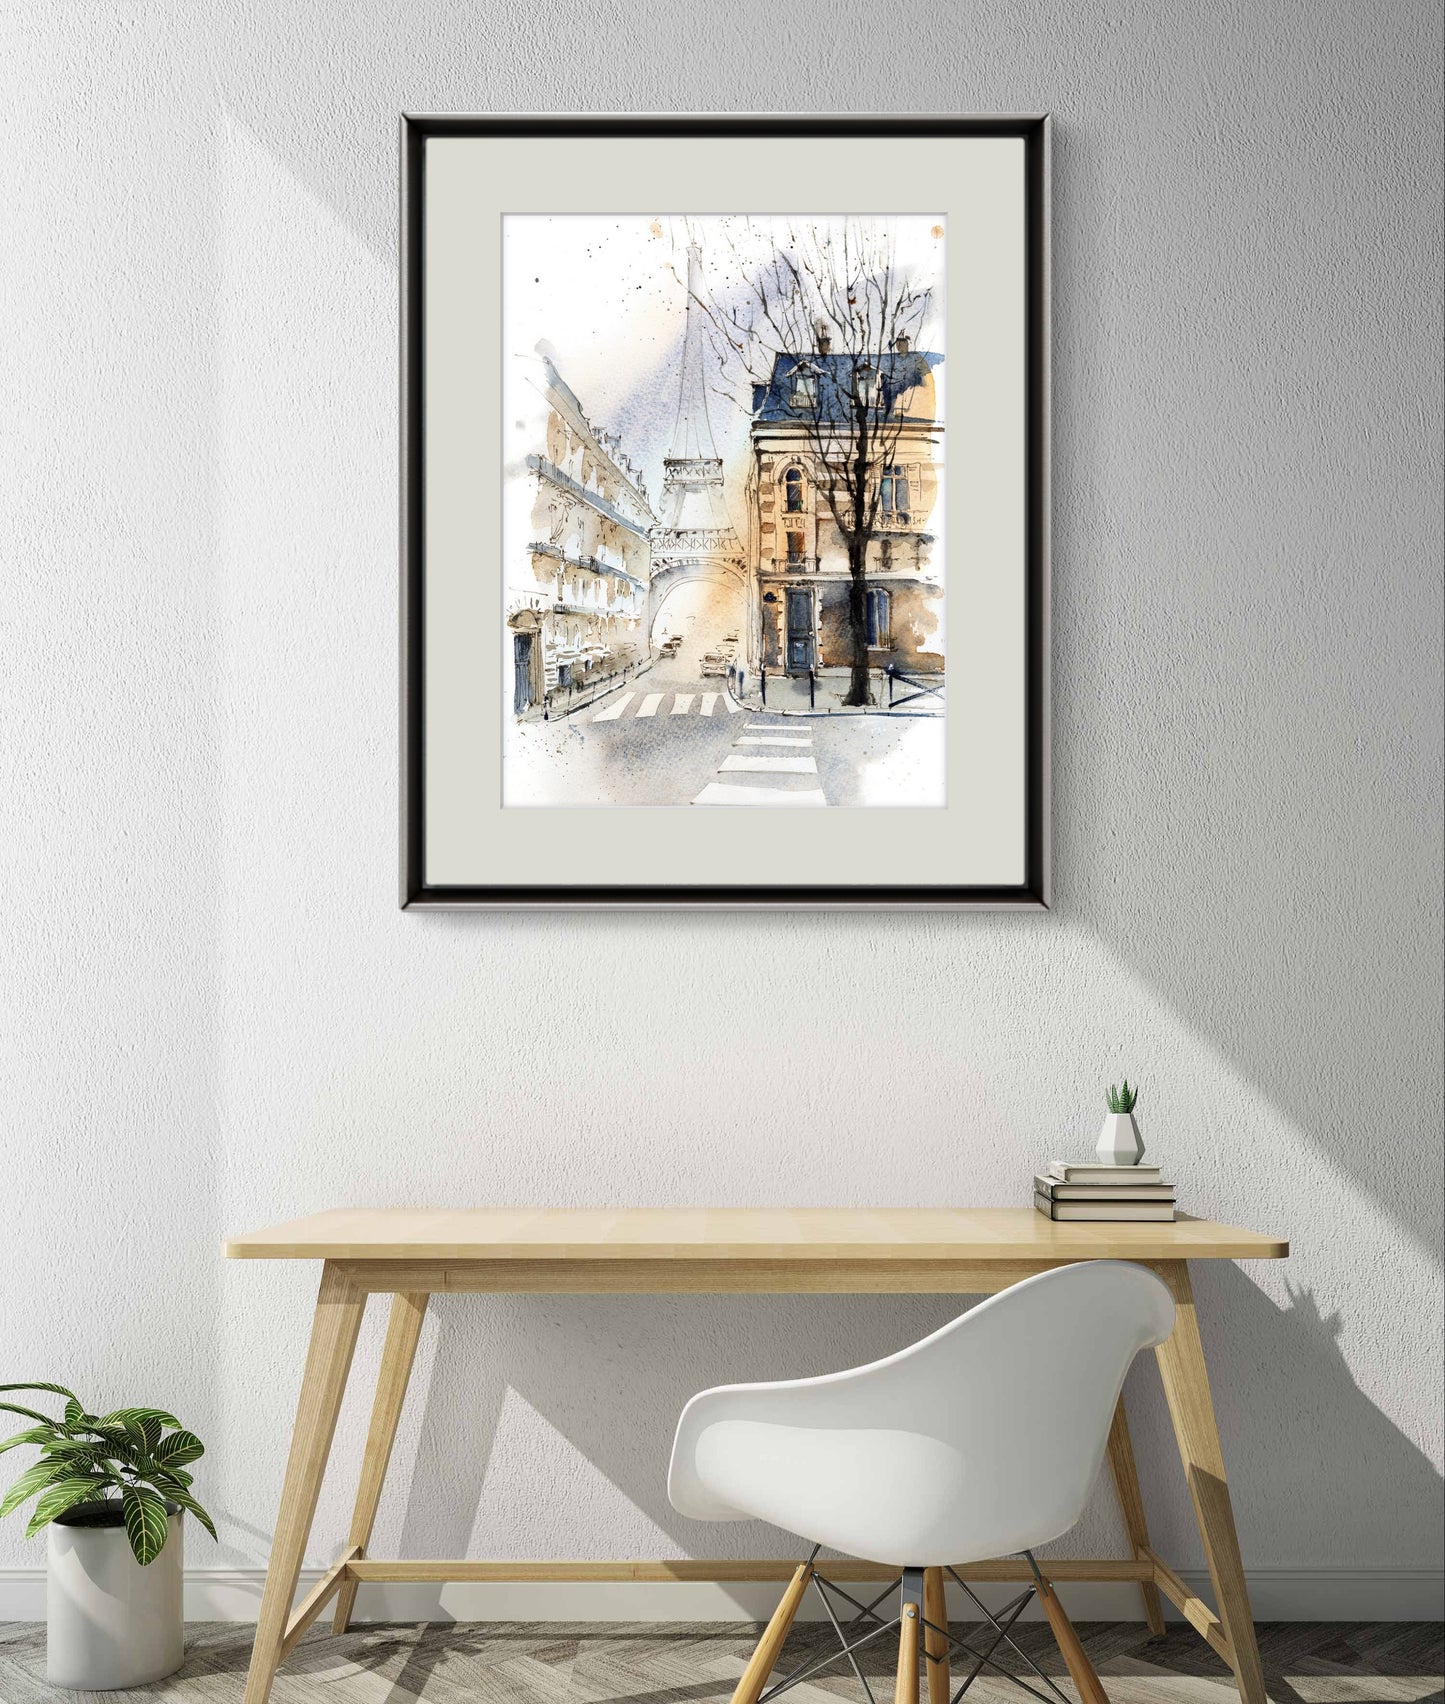 Parisian Architecture Art Print, Handcrafted Watercolor Eiffel Tower, Unique Travel Art Gift Idea